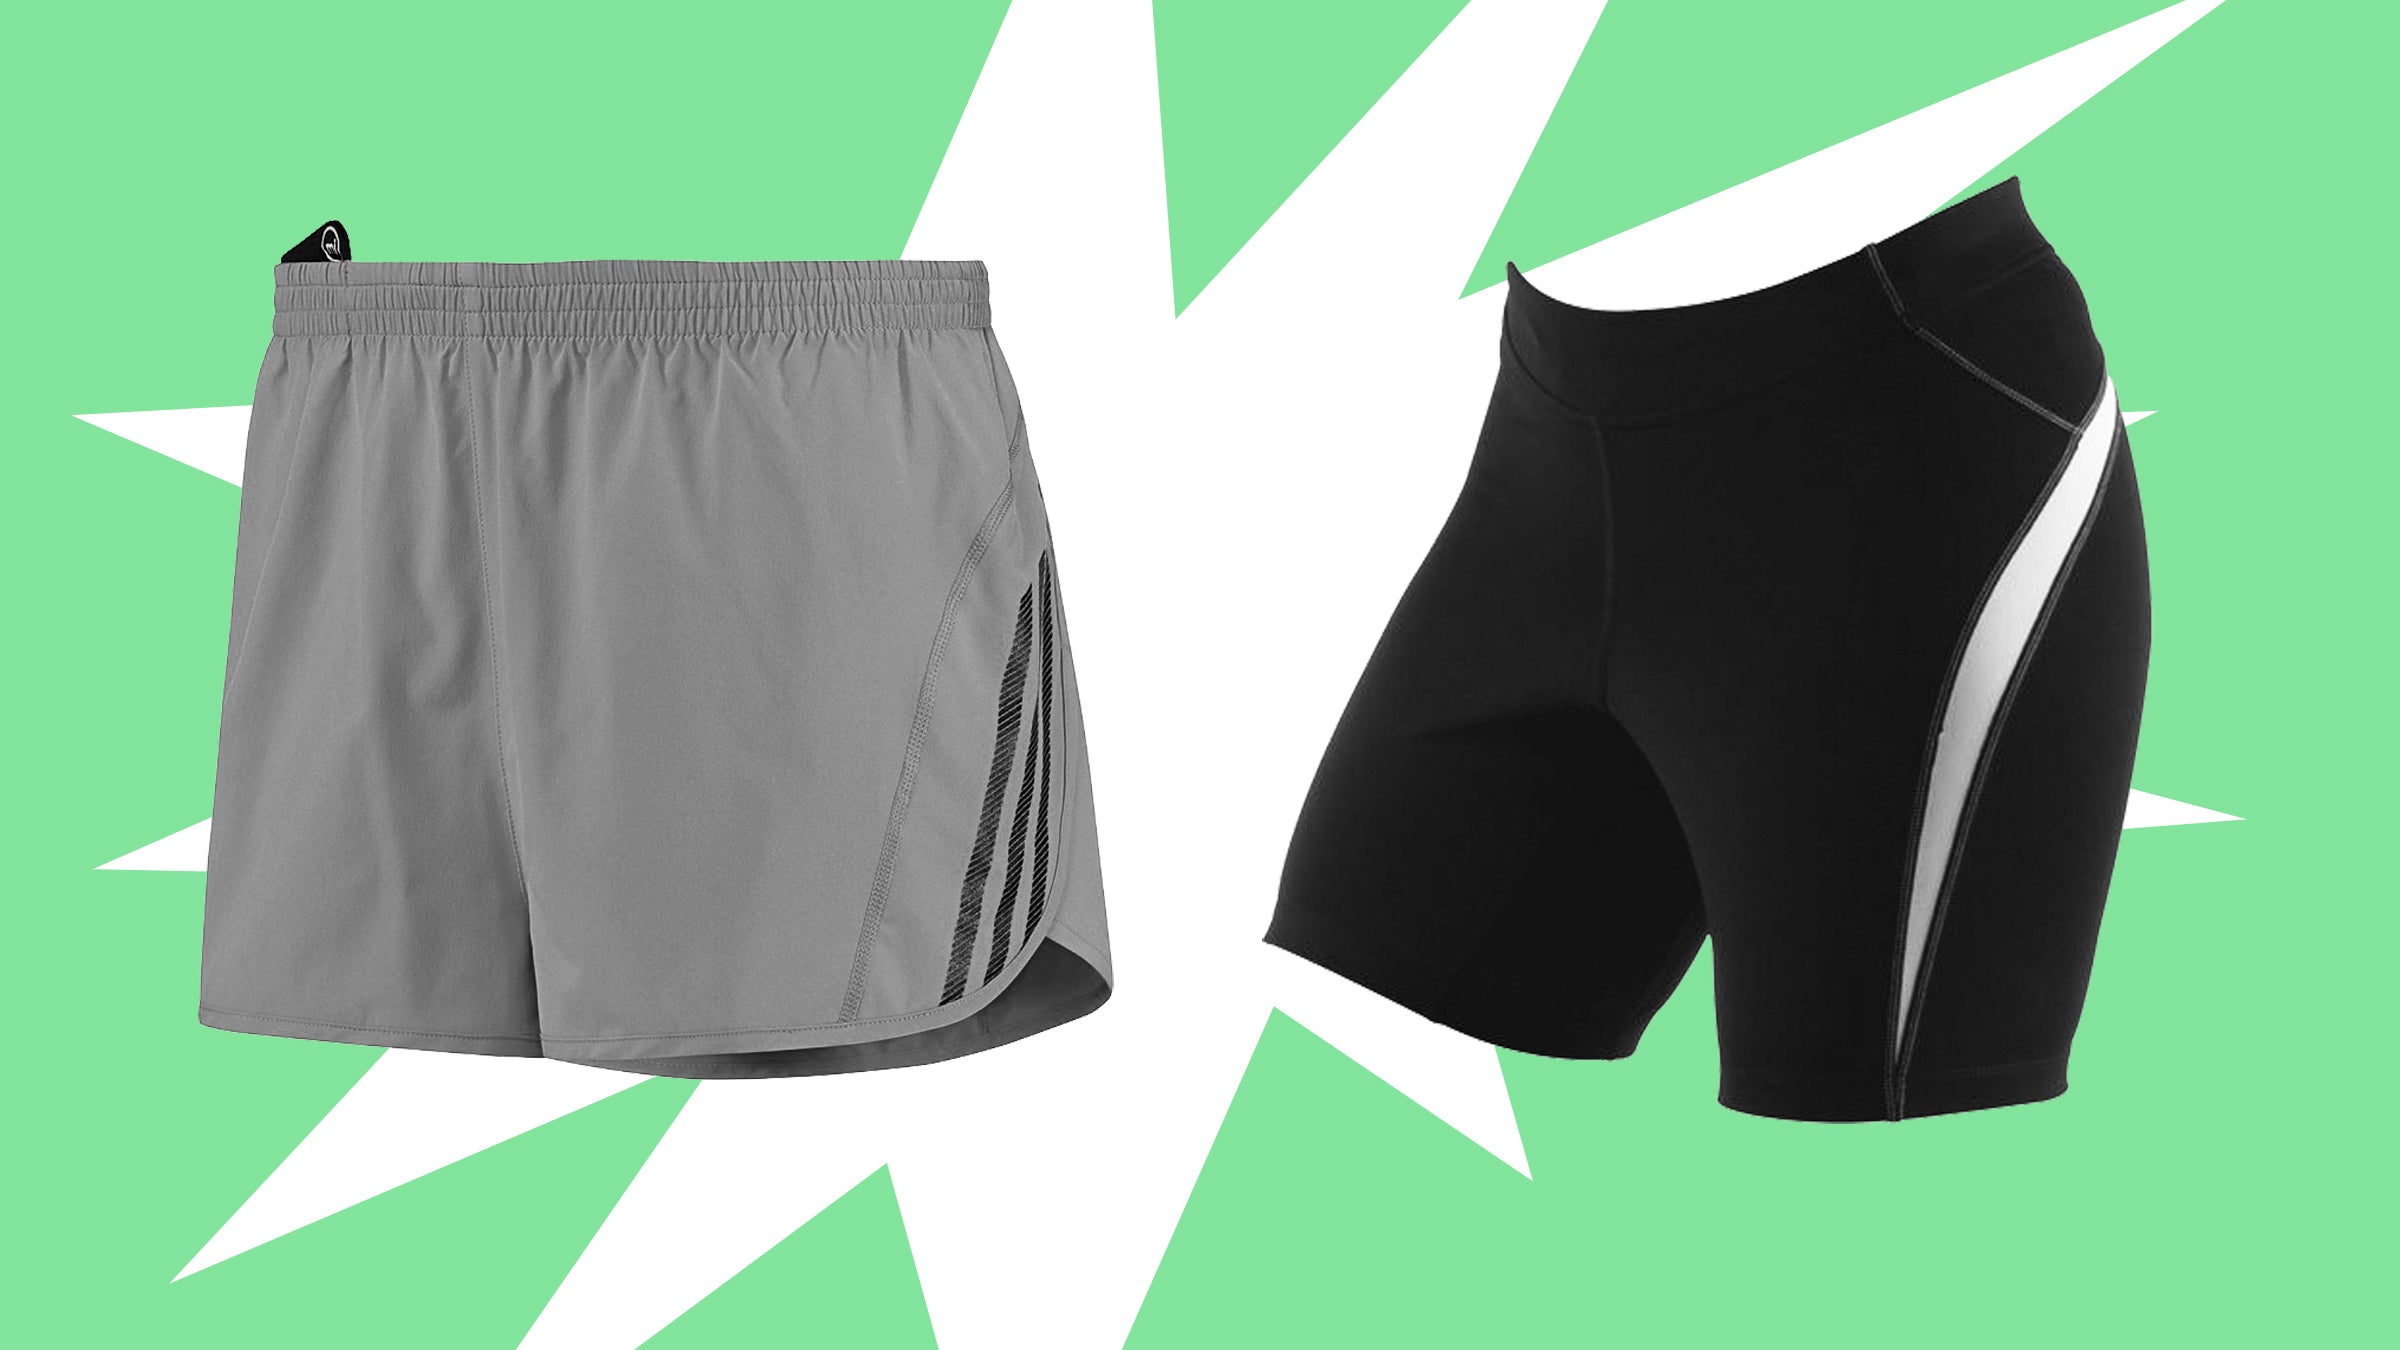 Short Shorts vs. Tights Throwdown